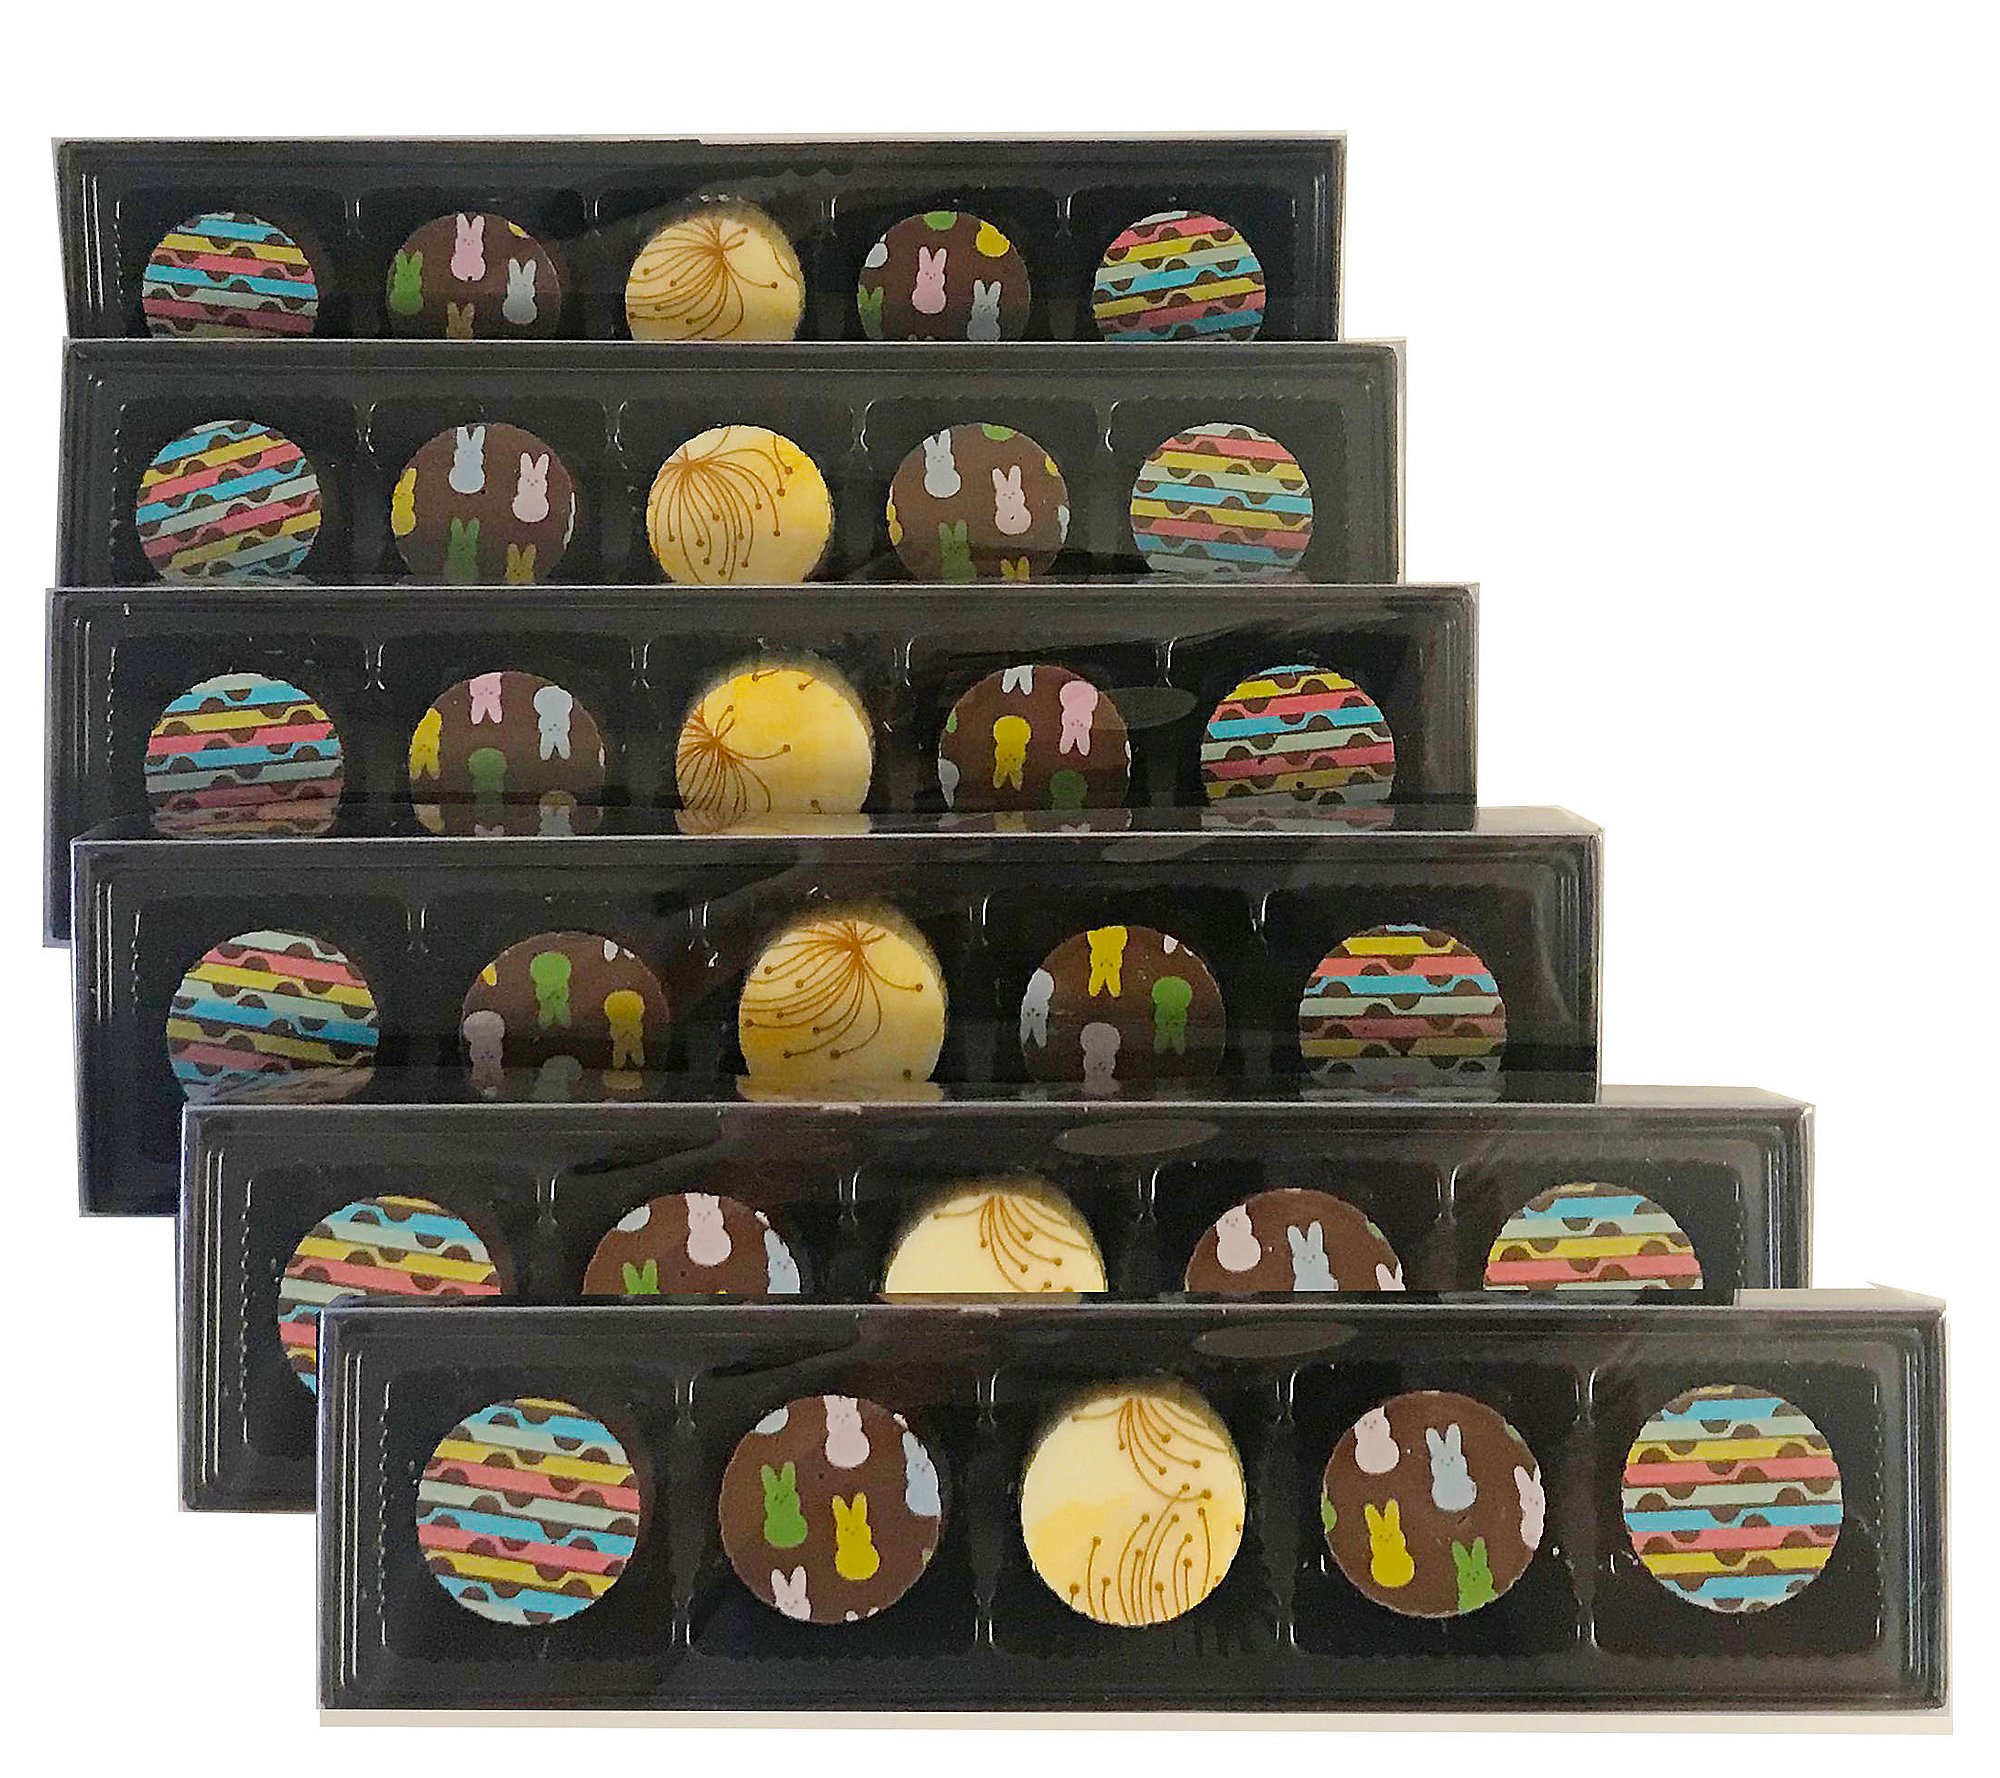 Chocolate Works (6) 5-Piece Easter Basket Truff le Suprises